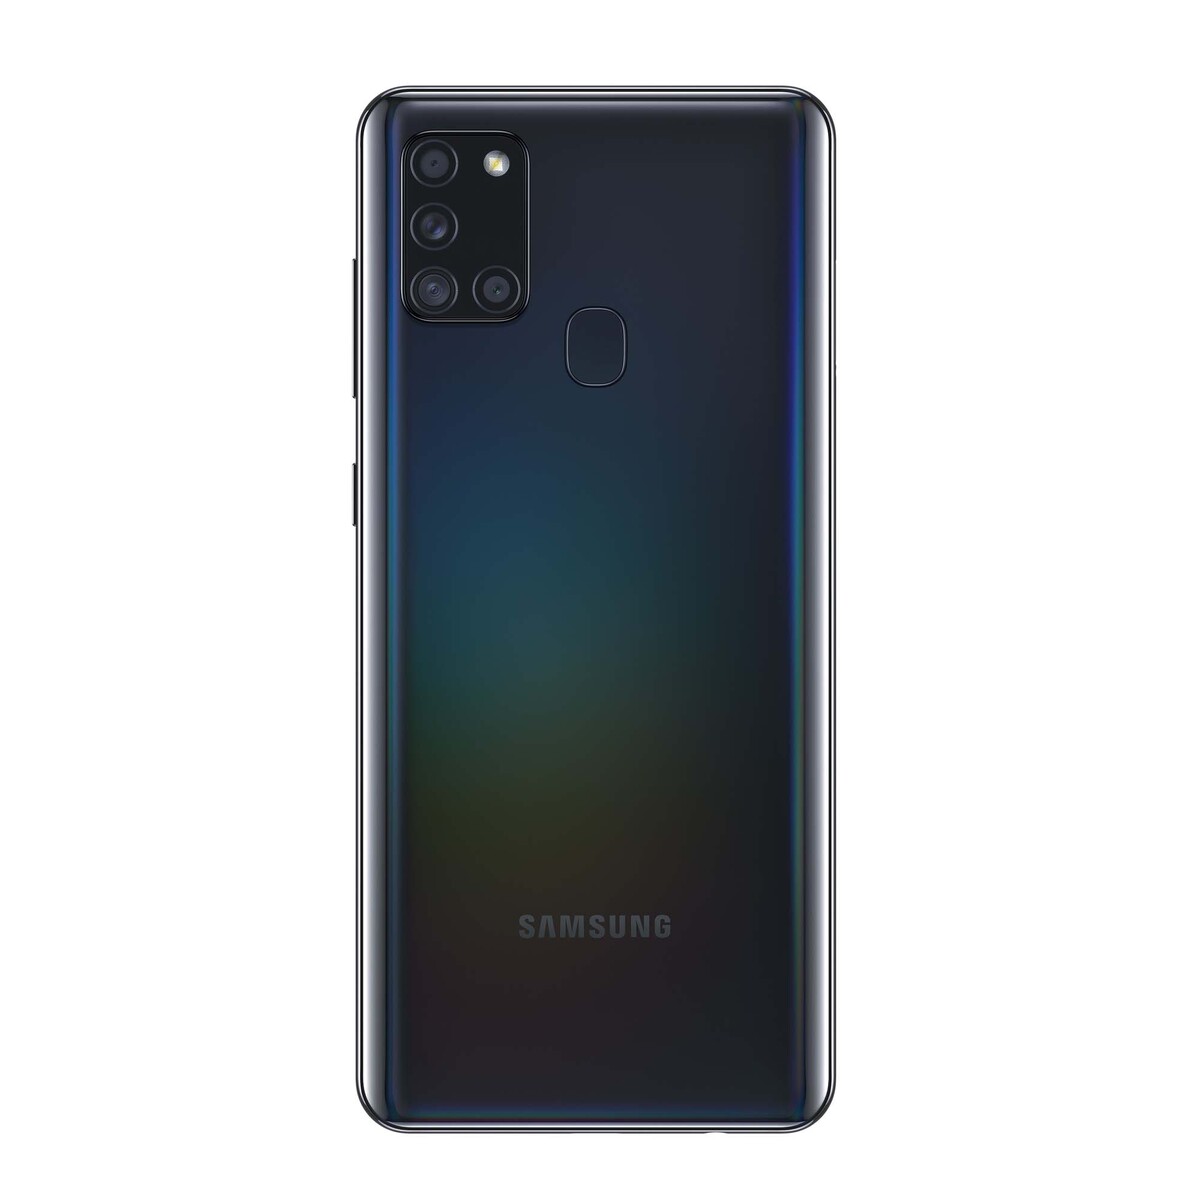 Samsung galaxy s21 черный. Samsung Galaxy a21. Samsung Galaxy a21s 128gb. Samsung a21s 64gb. Samsung Galaxy a21s 64gb.